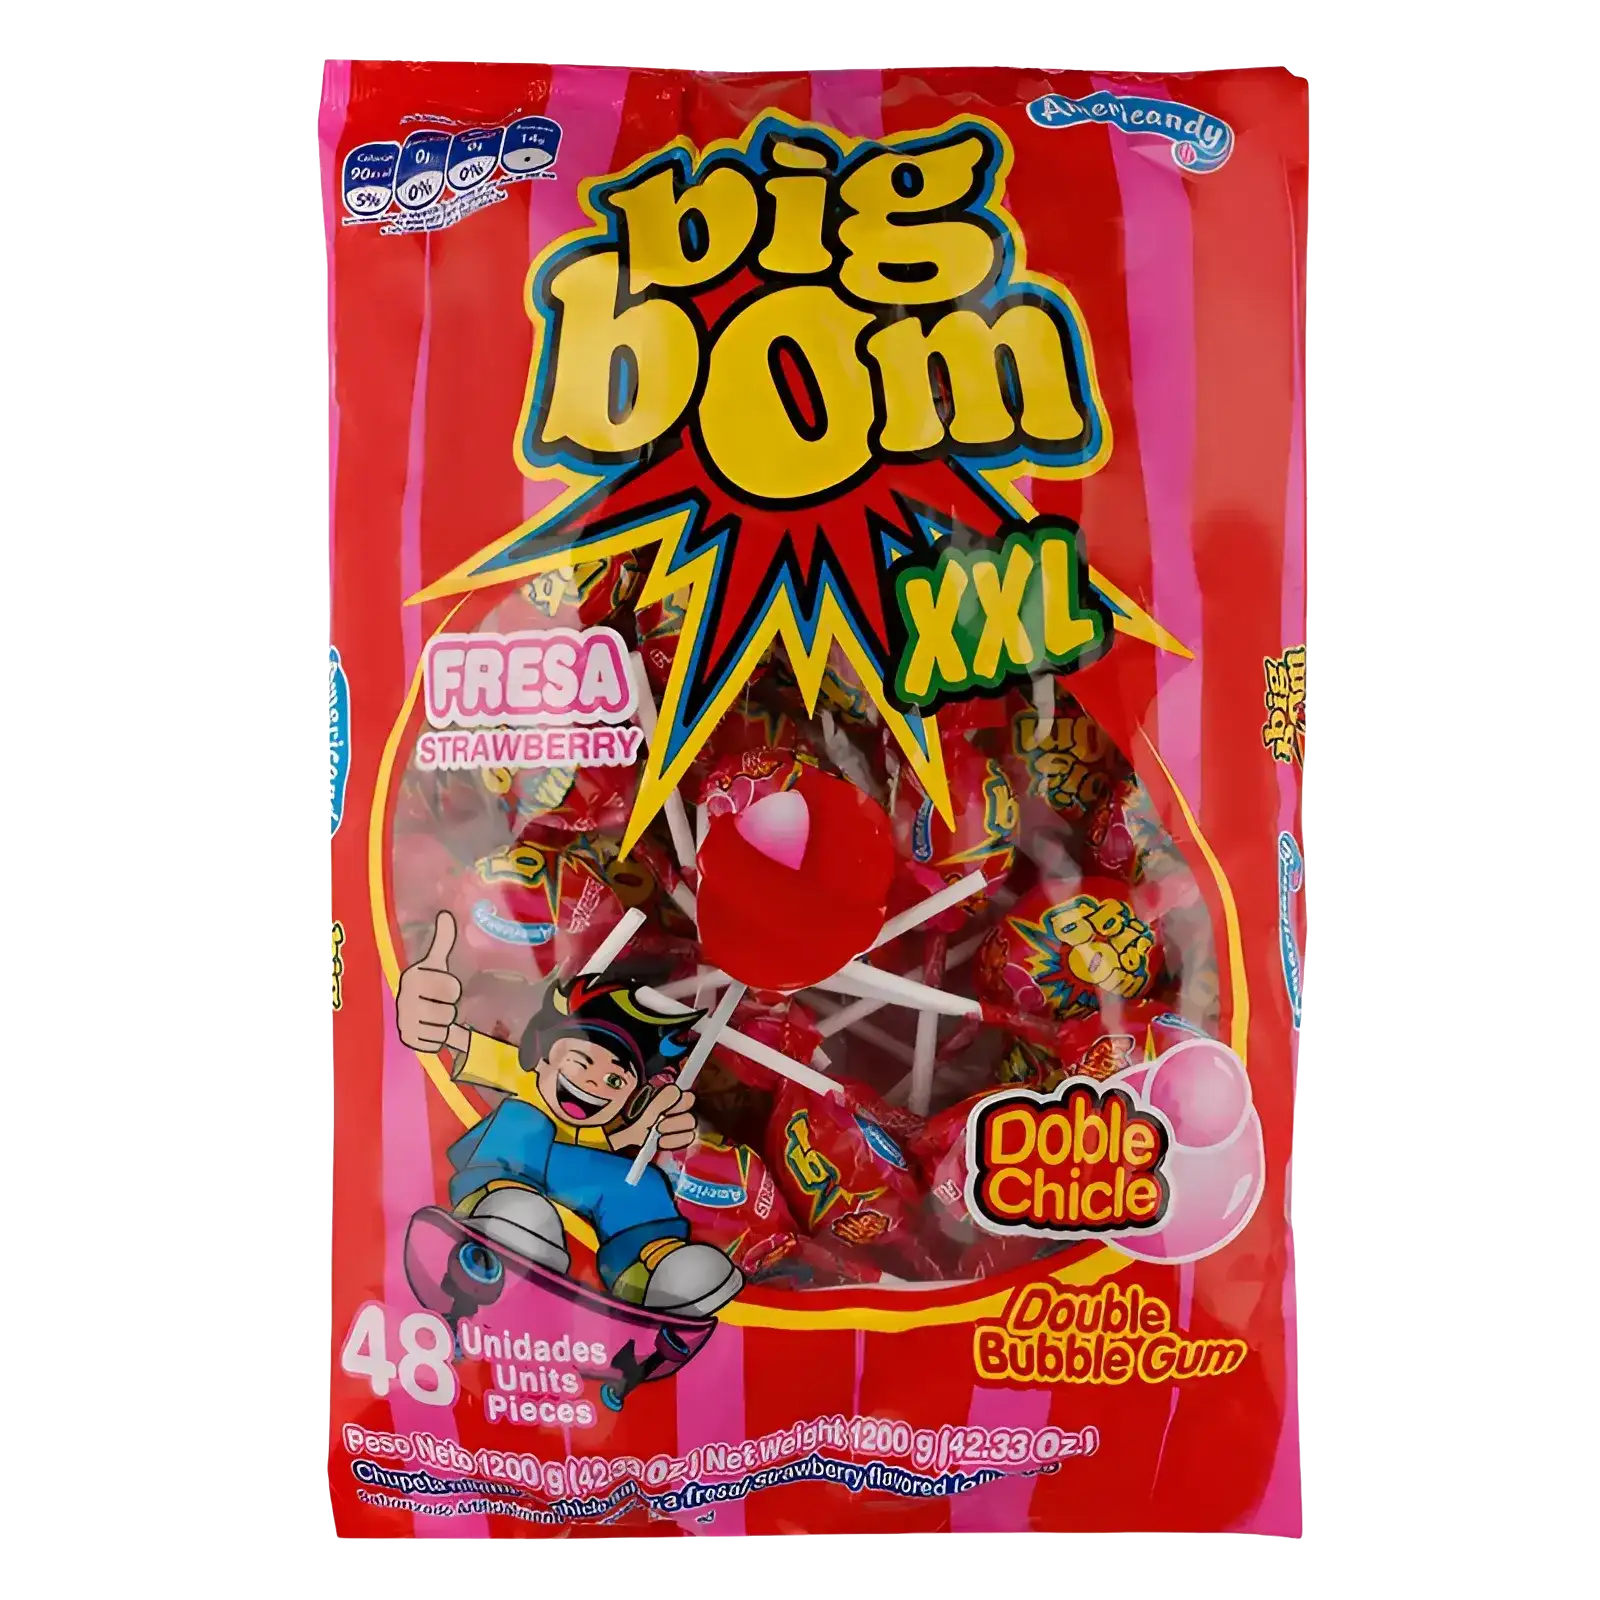 Americandy Big Bom Xxl Strawberry Lollipops, 25 g (Pack of 48) - 01040299 (JBI85ACB5)